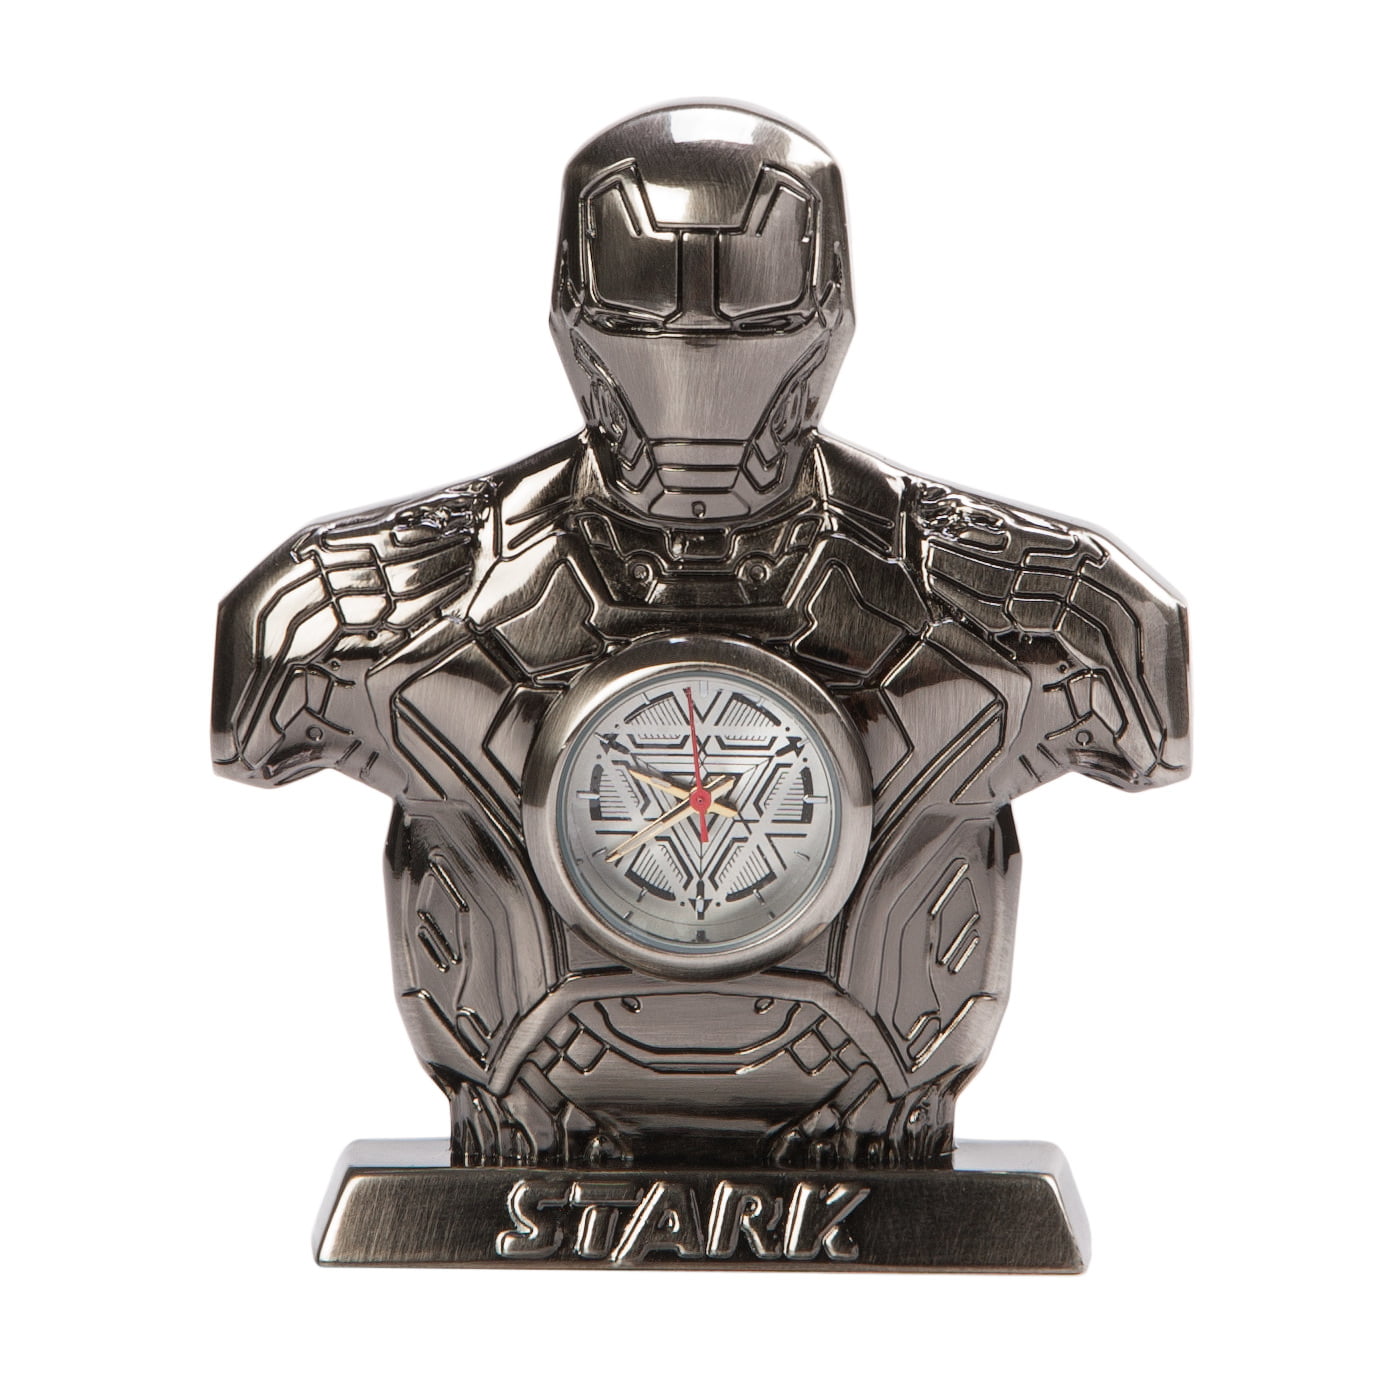 Marvel Avengers Age of Ultron Silver Iron Man Mark 43 Desk Clock